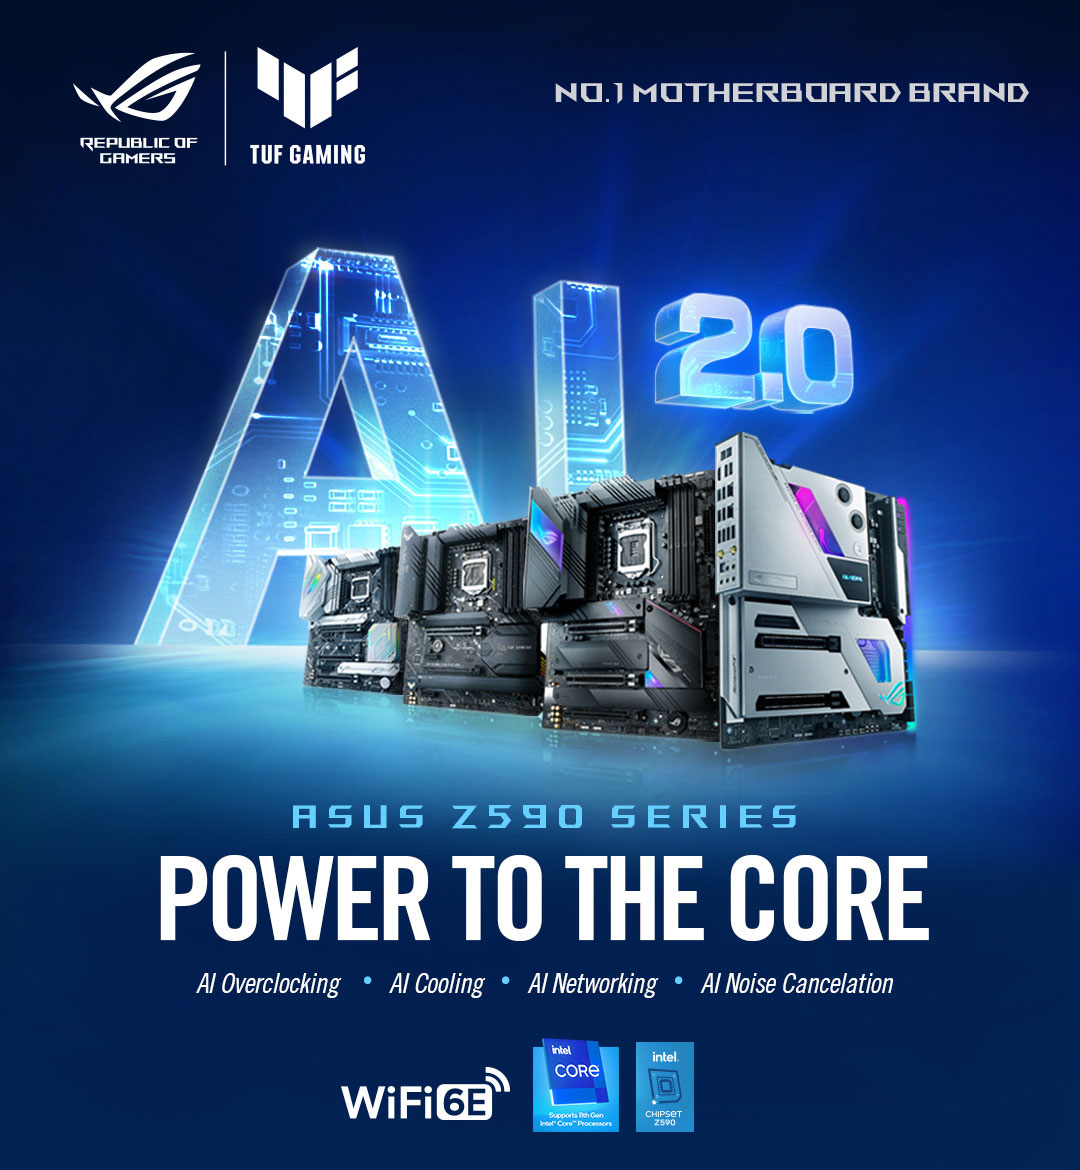 ASUS Z590 Series - The best Intel 11th Gen Motherboards